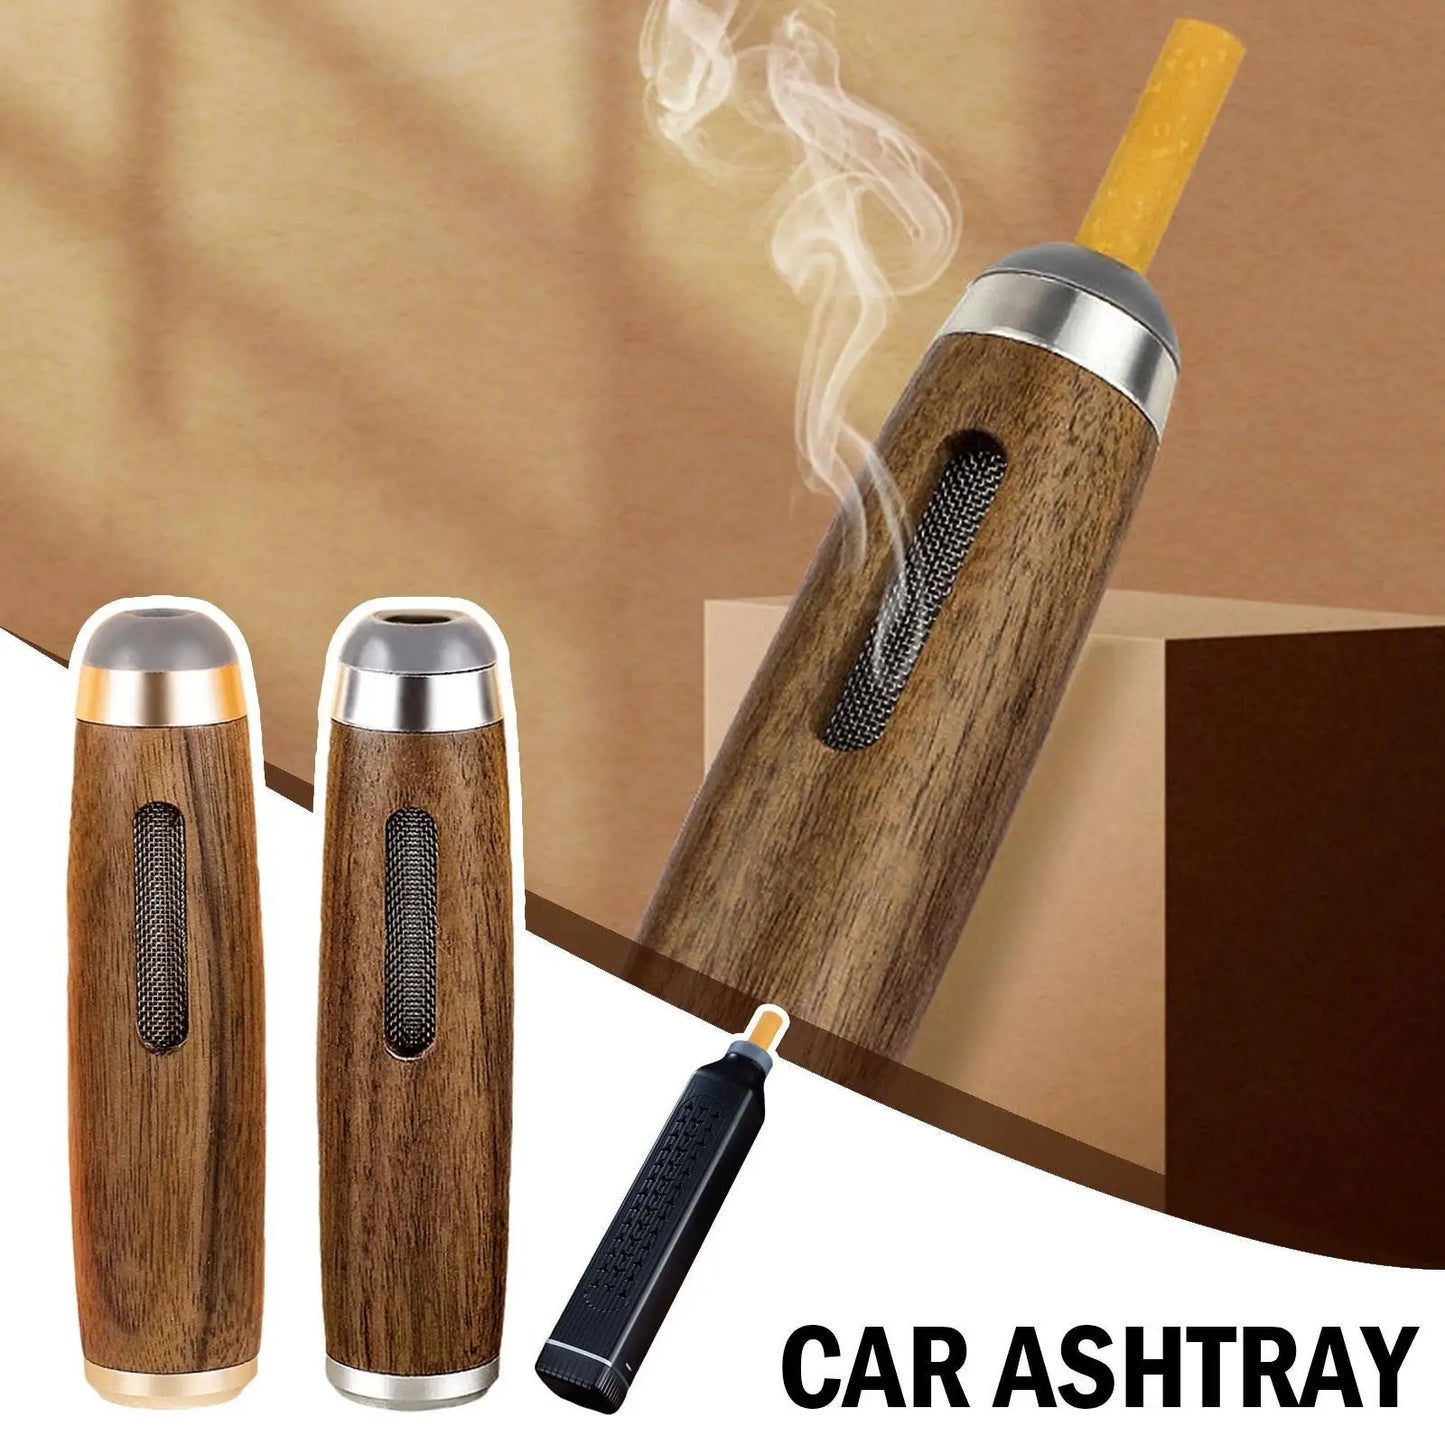 Dust-free Smoking Car Ashtray